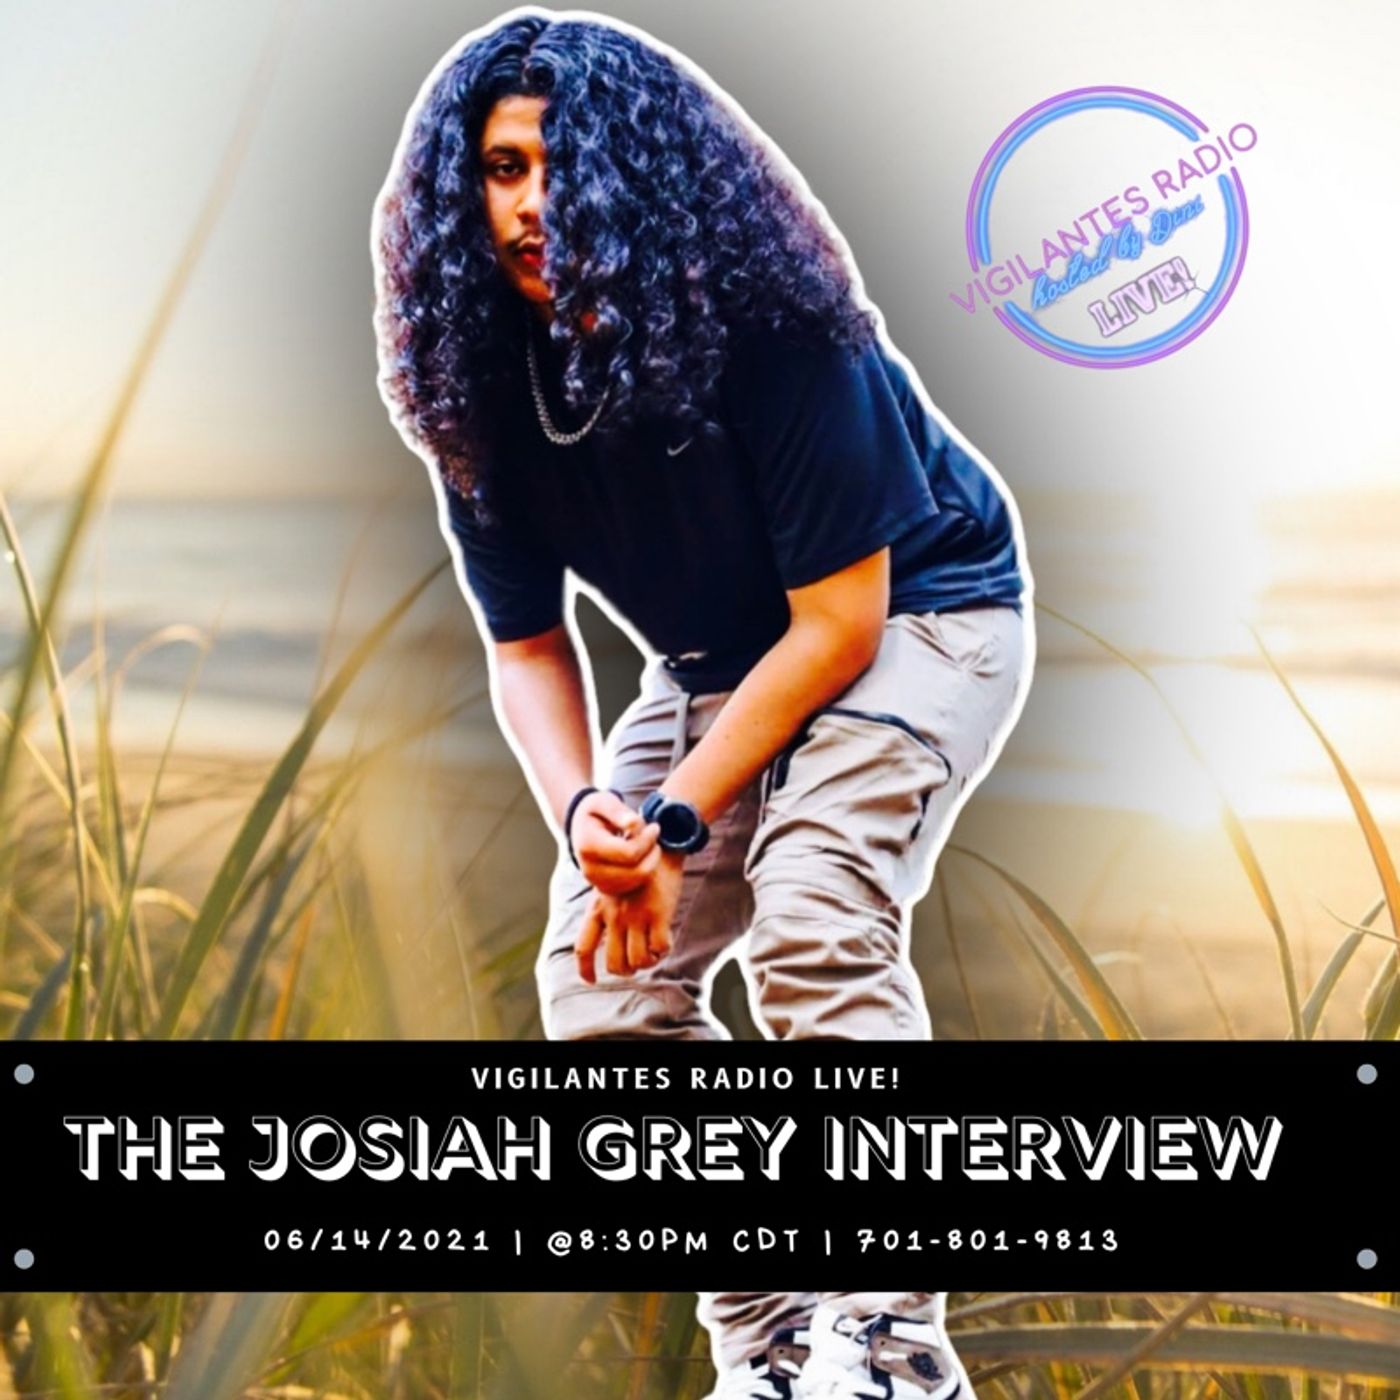 The Josiah Grey Interview. Image